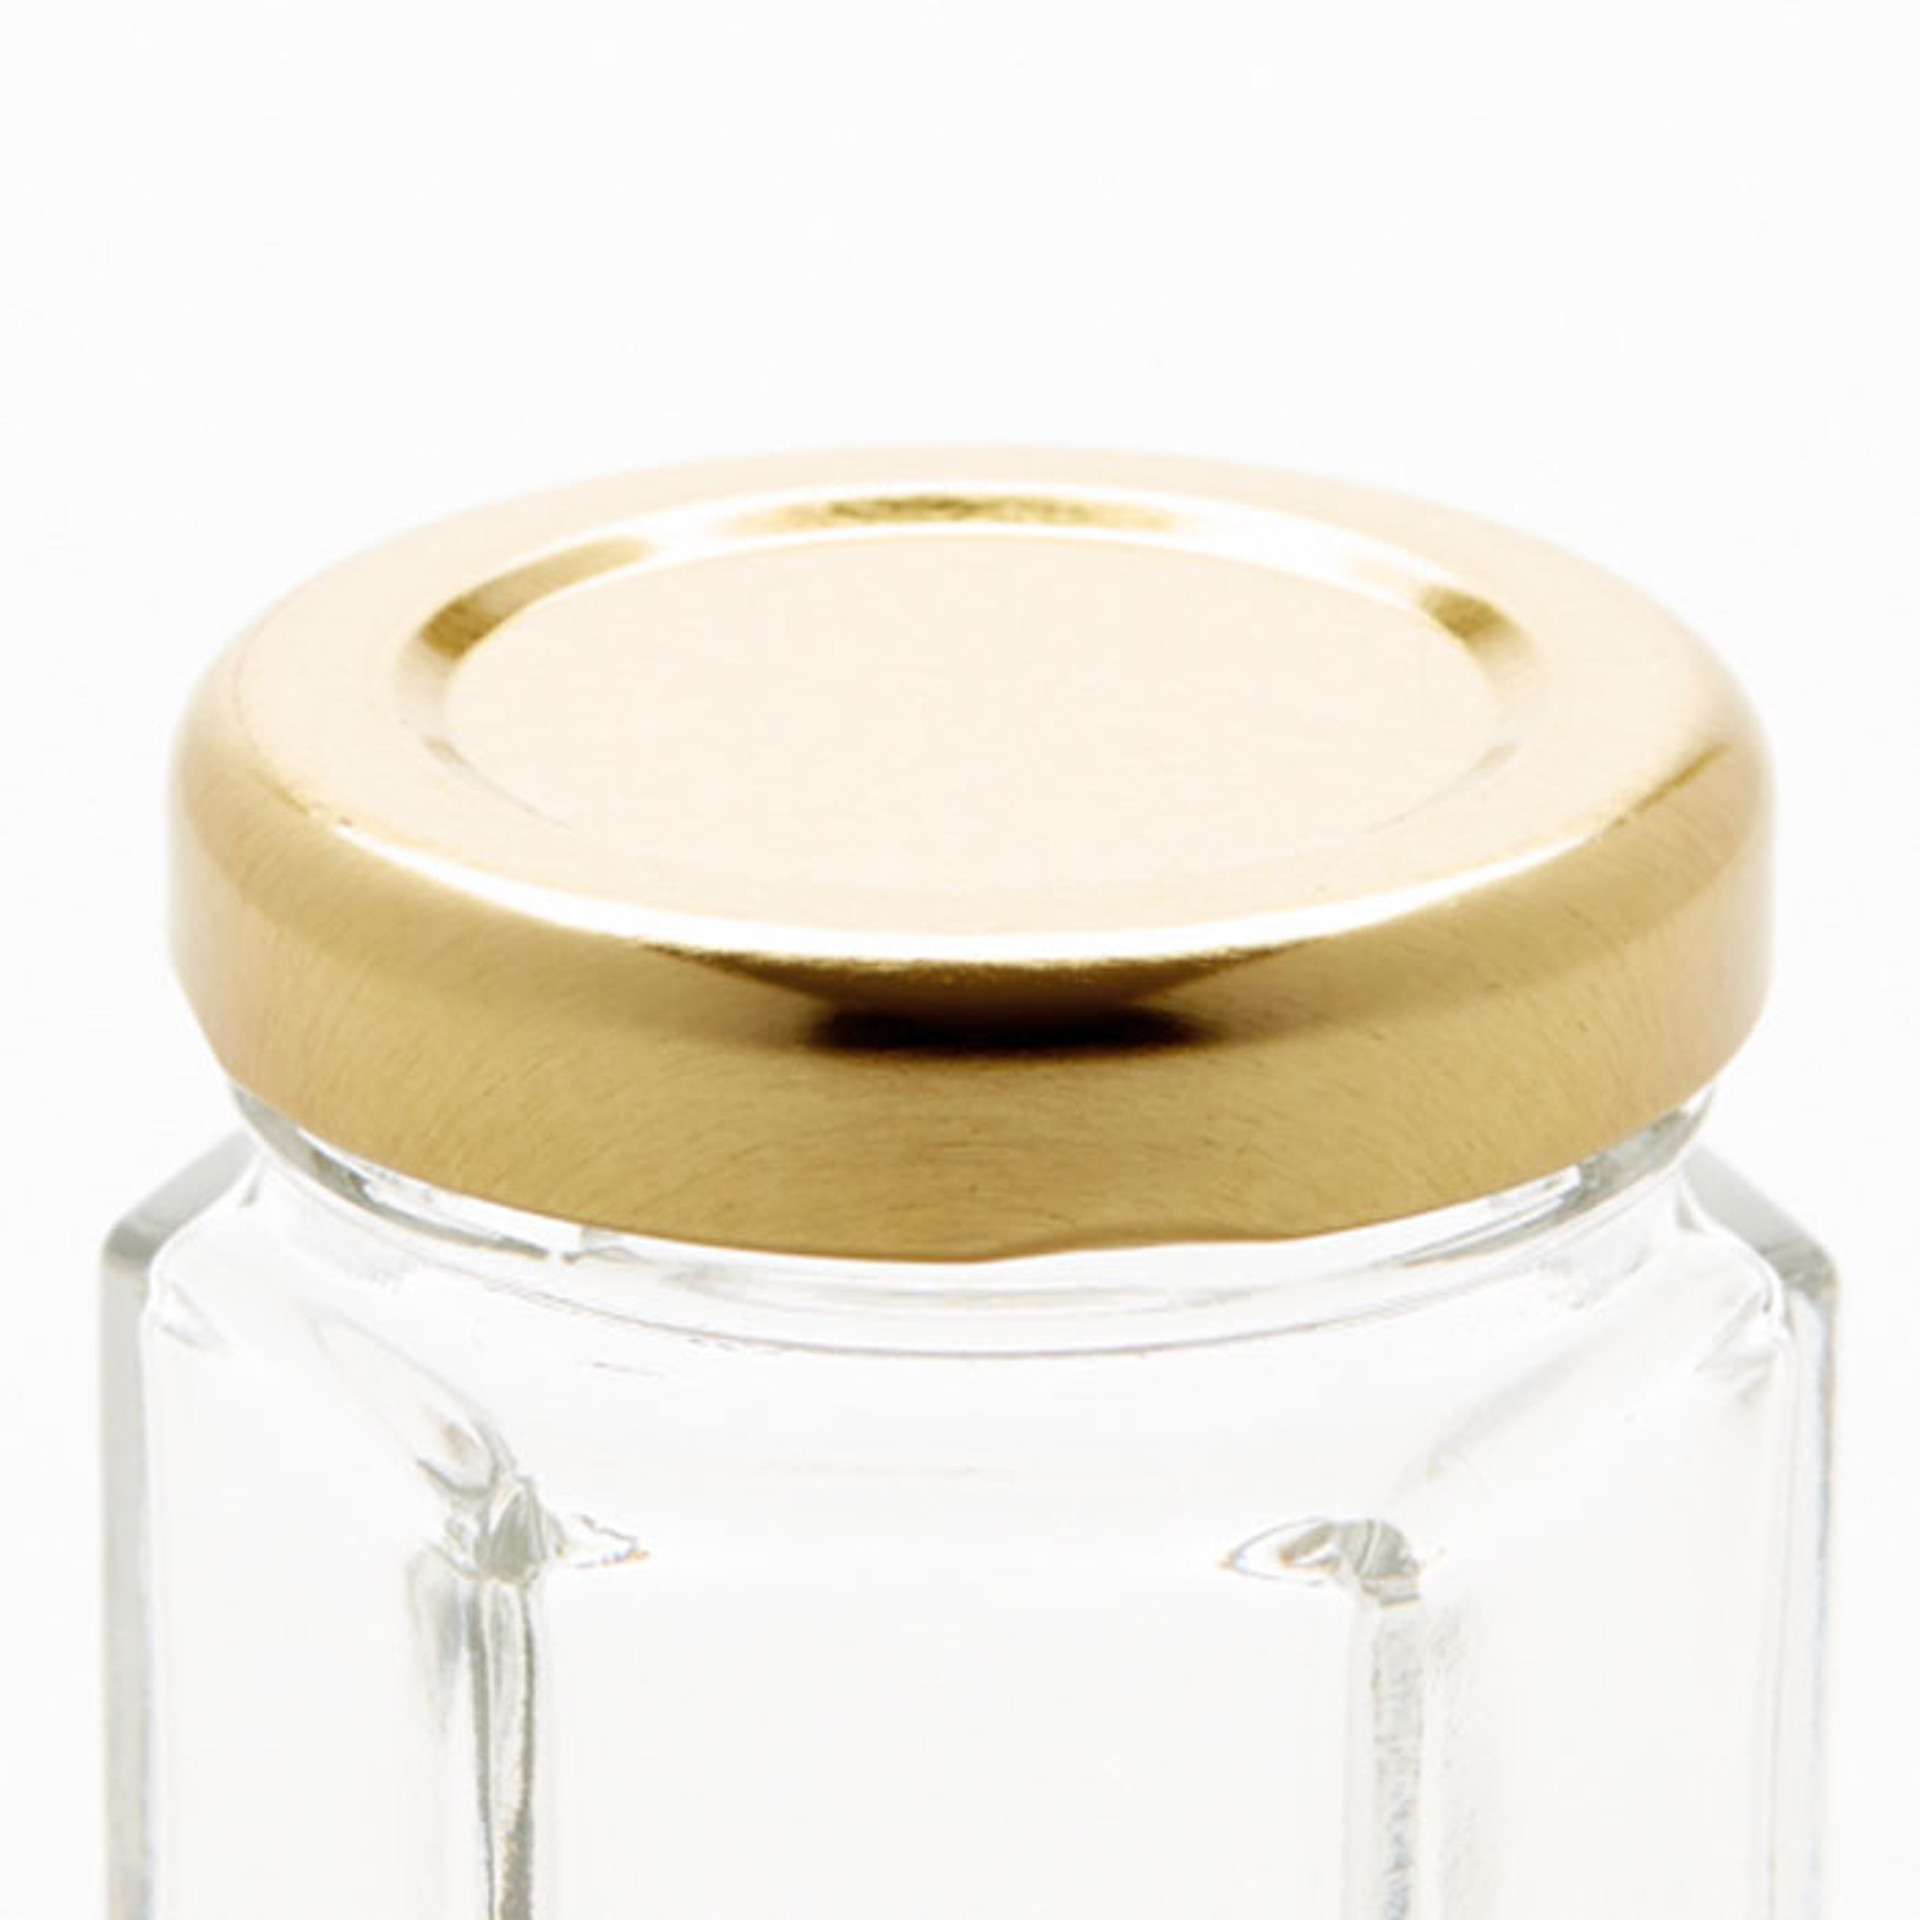 1.5 oz Clear Hexagon Jars,Small Glass Jars With Lids(golden),Mason